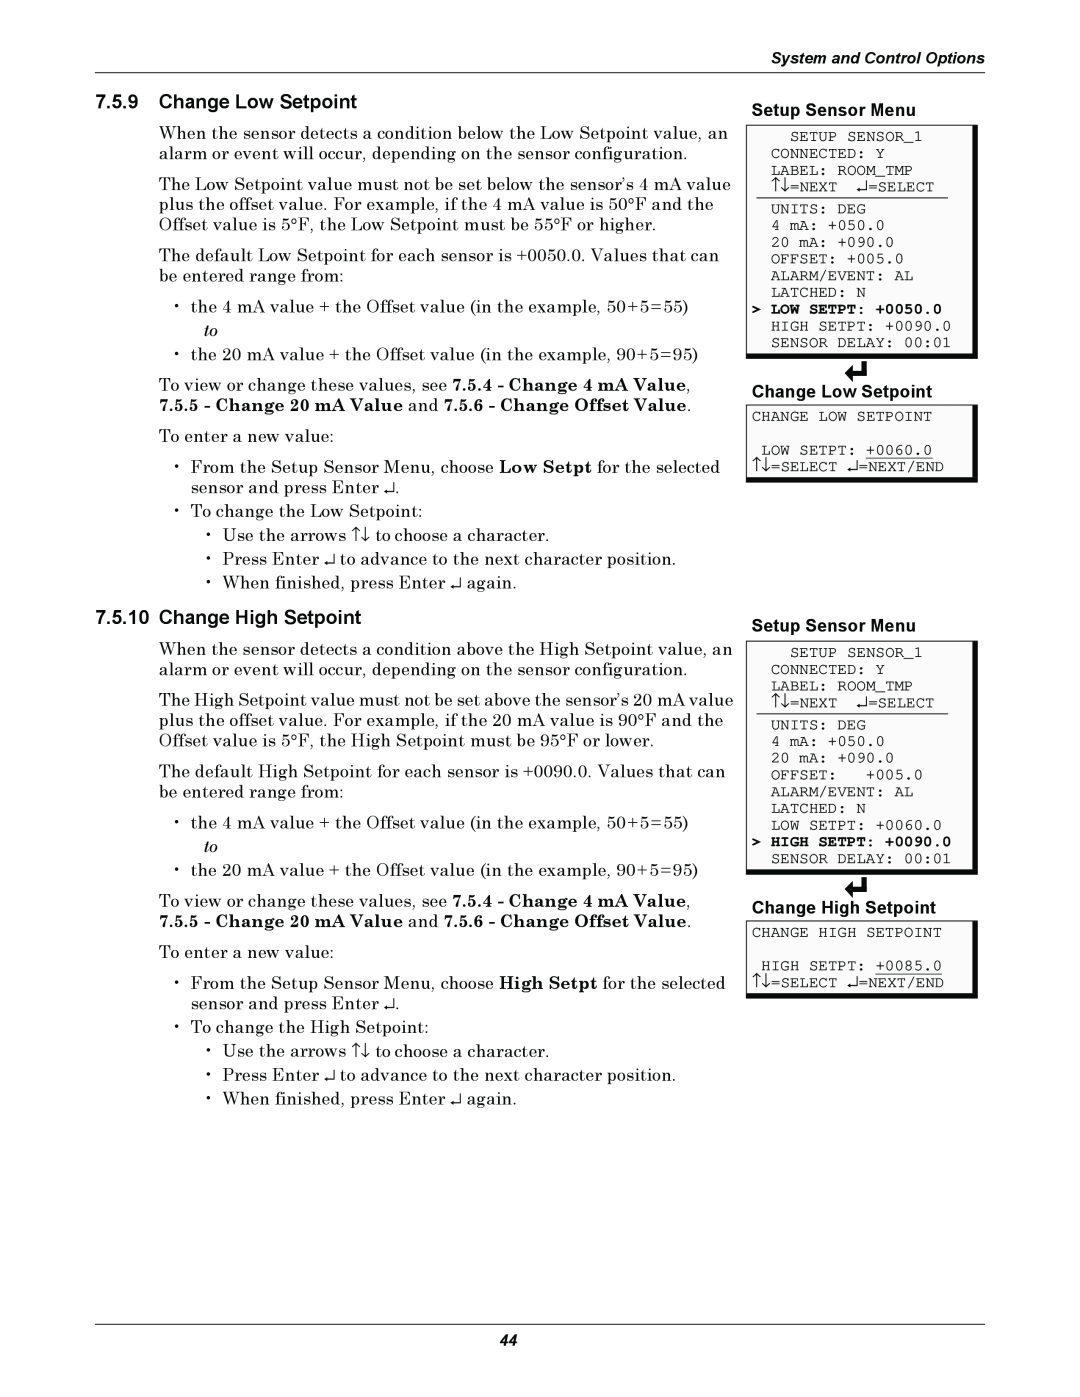 Emerson AC8 user manual 7.5.9Change Low Setpoint, 7.5.10Change High Setpoint, Setup Sensor Menu 